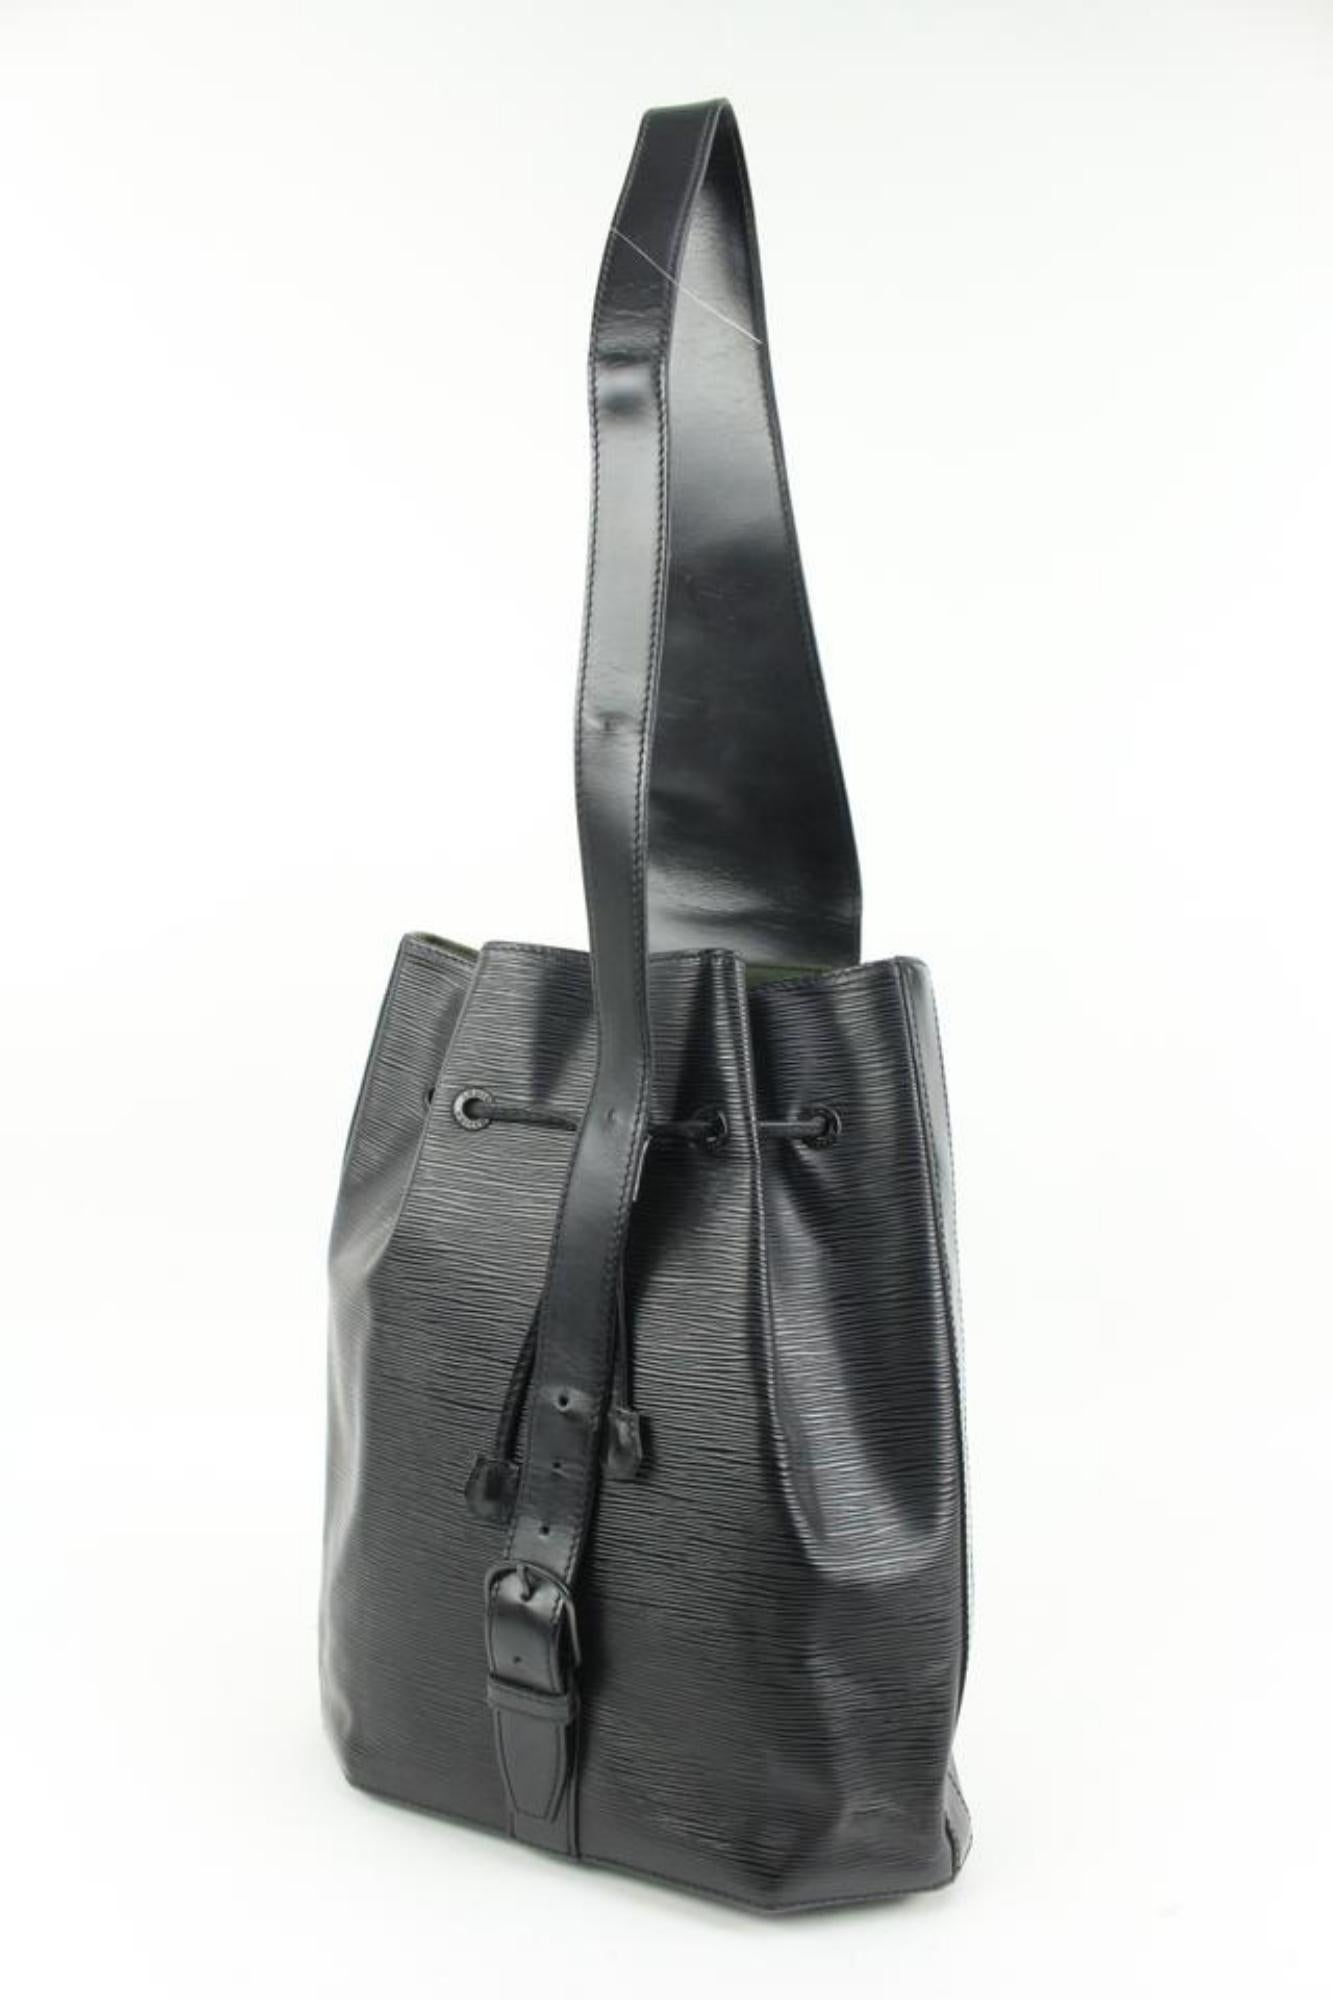 Louis Vuitton Black Epi Leather Noir Sac a Dos Sling Backpack 41lk324s
Date Code/Serial Number: VI1921
Made In: France
Measurements: Length:  14